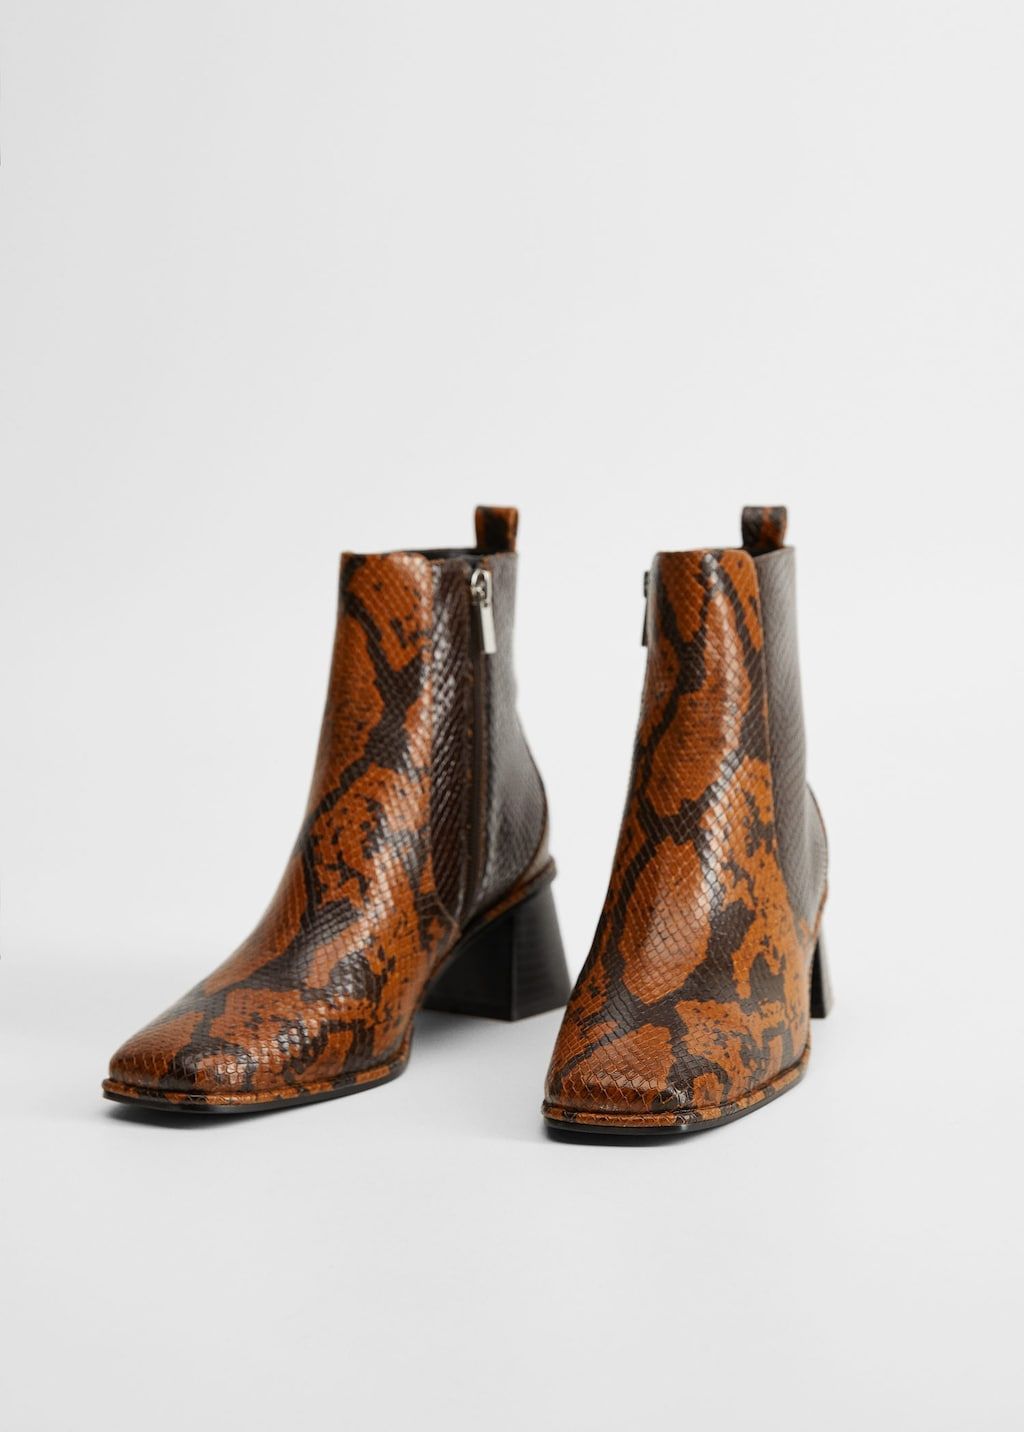 everlane snakeskin boots